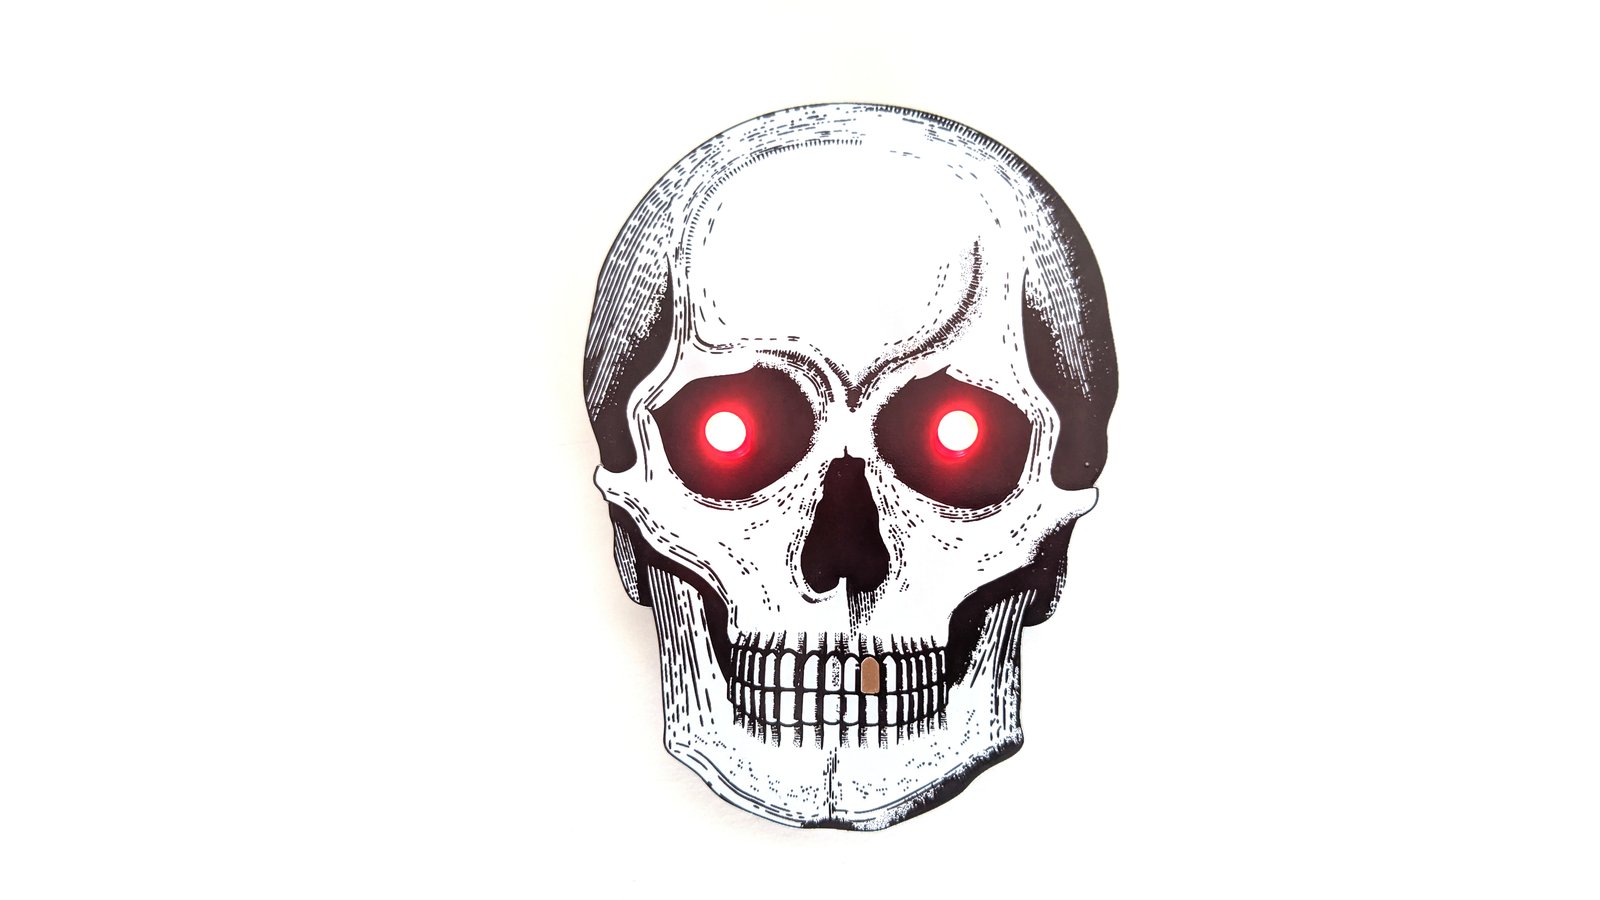 The Skull CTF